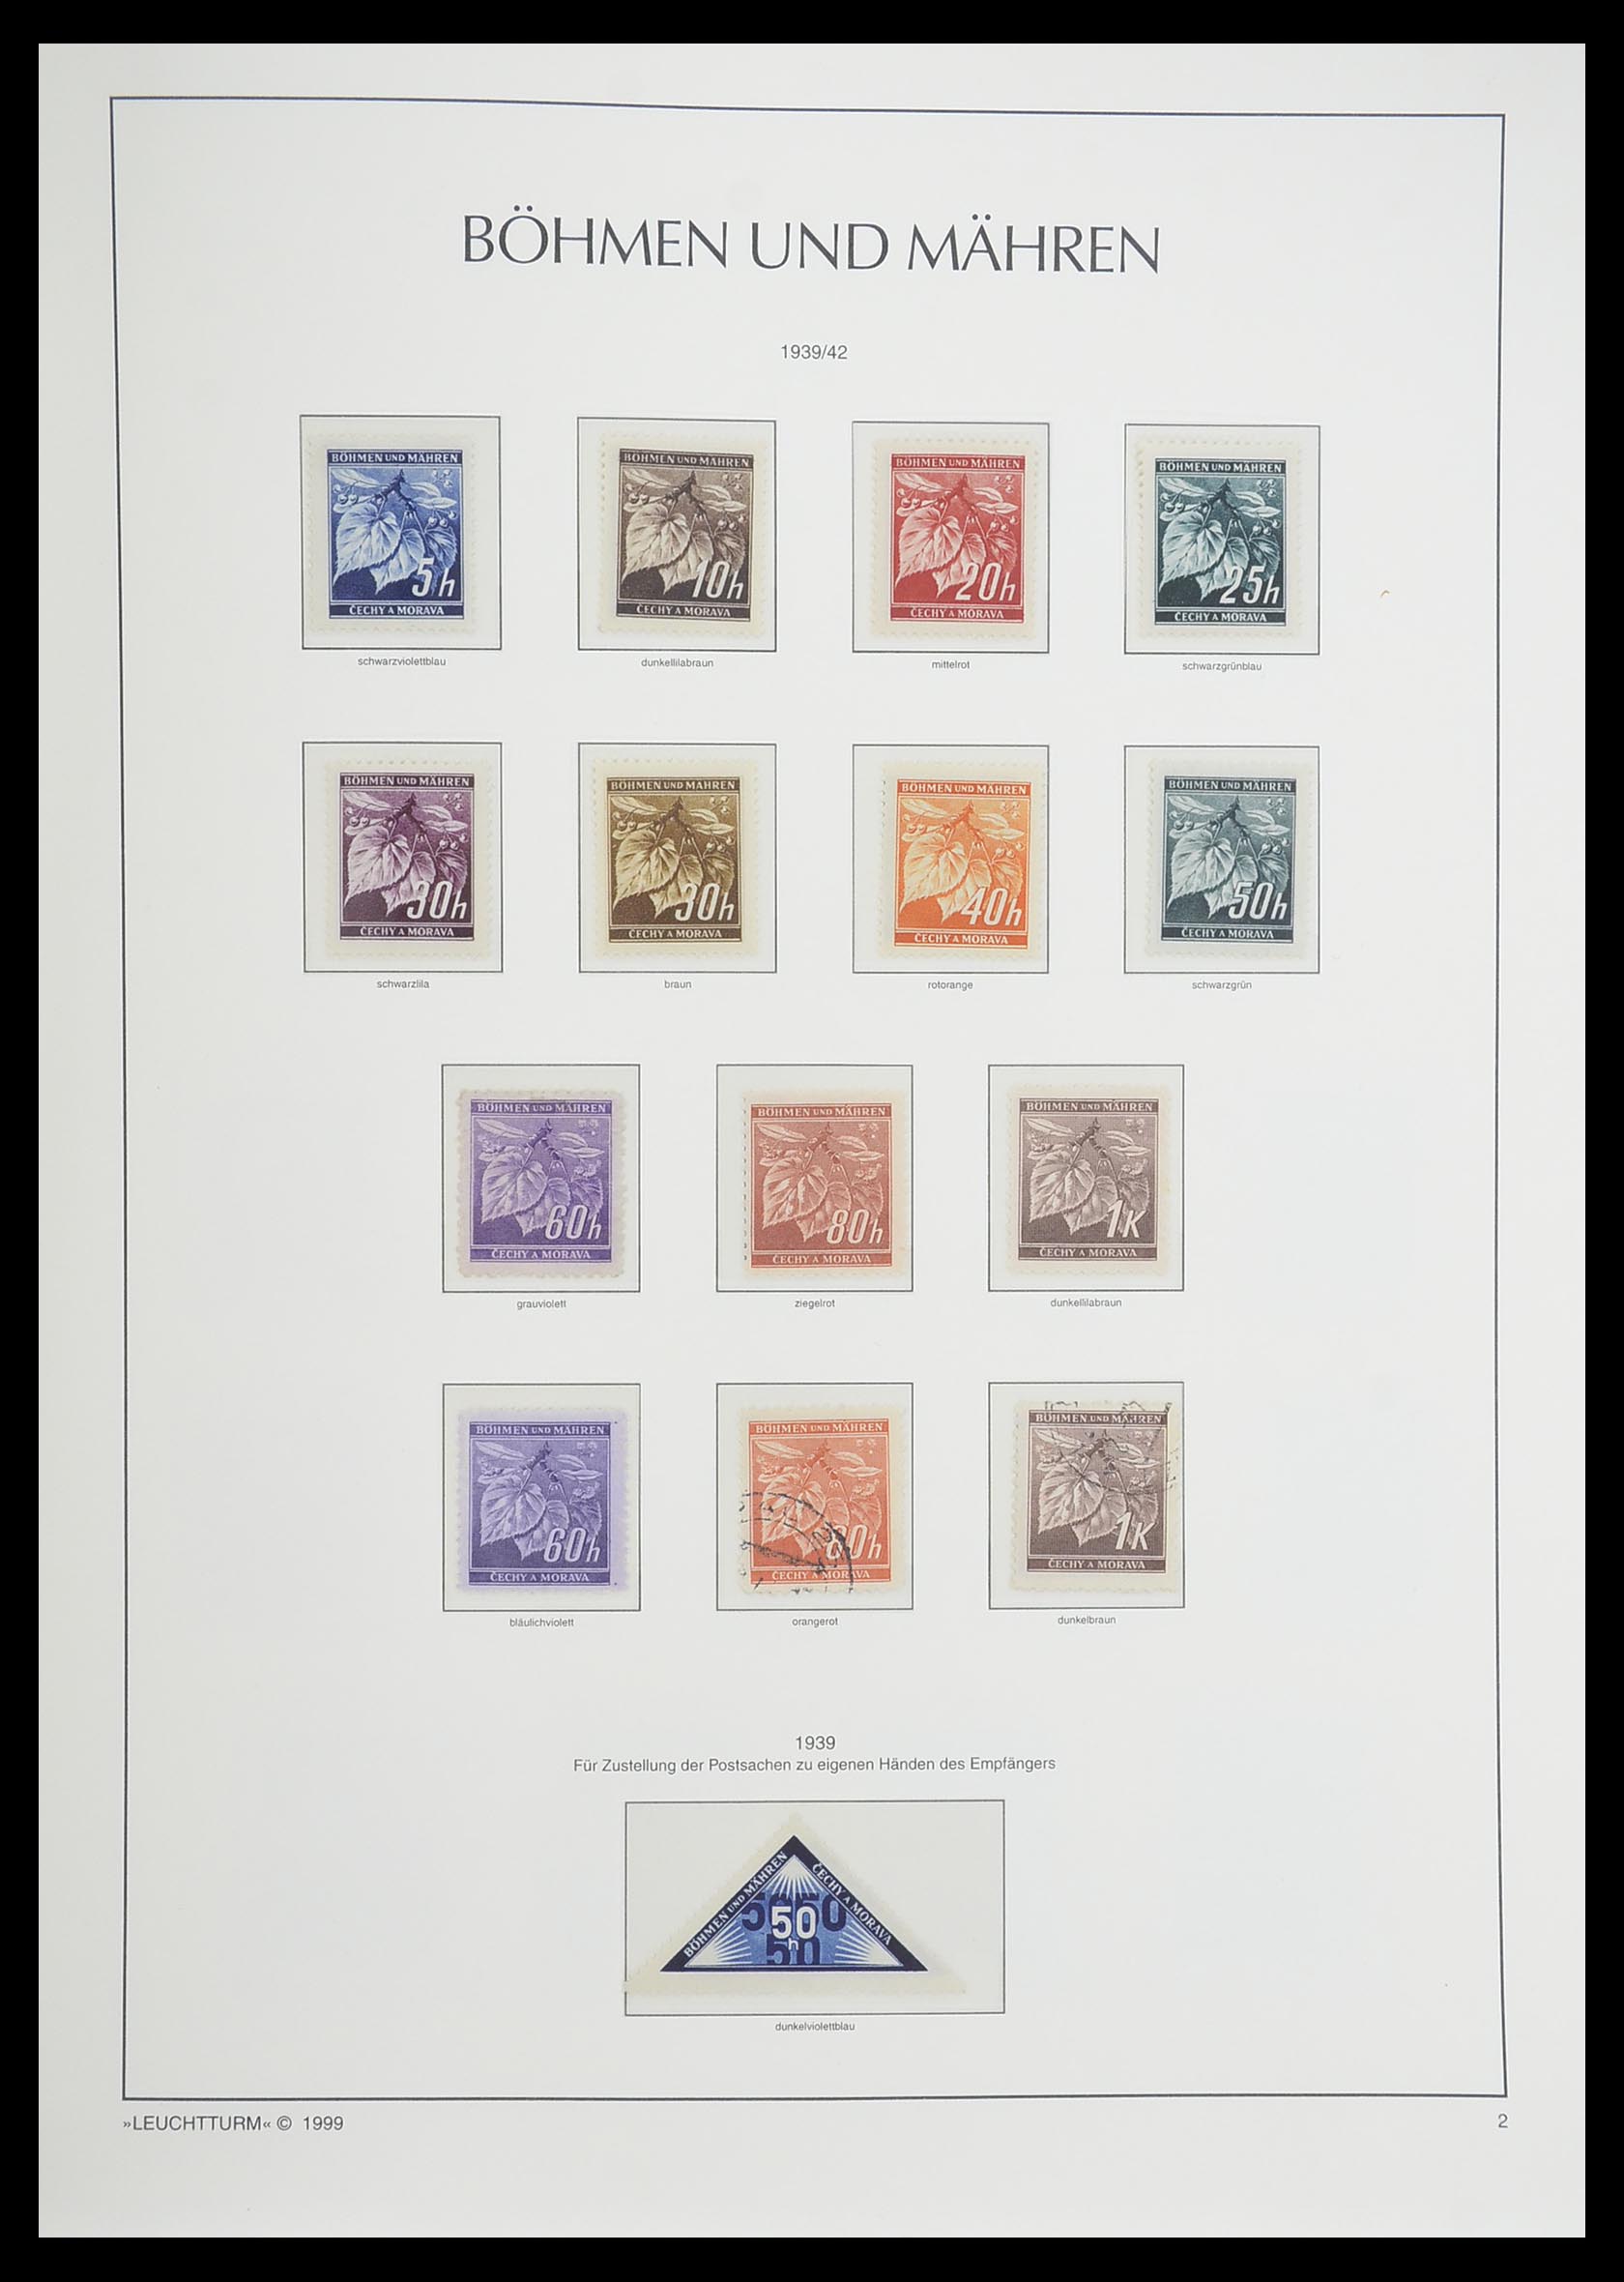 33455 095 - Stamp collection 33455 German Reich 1872-1945.